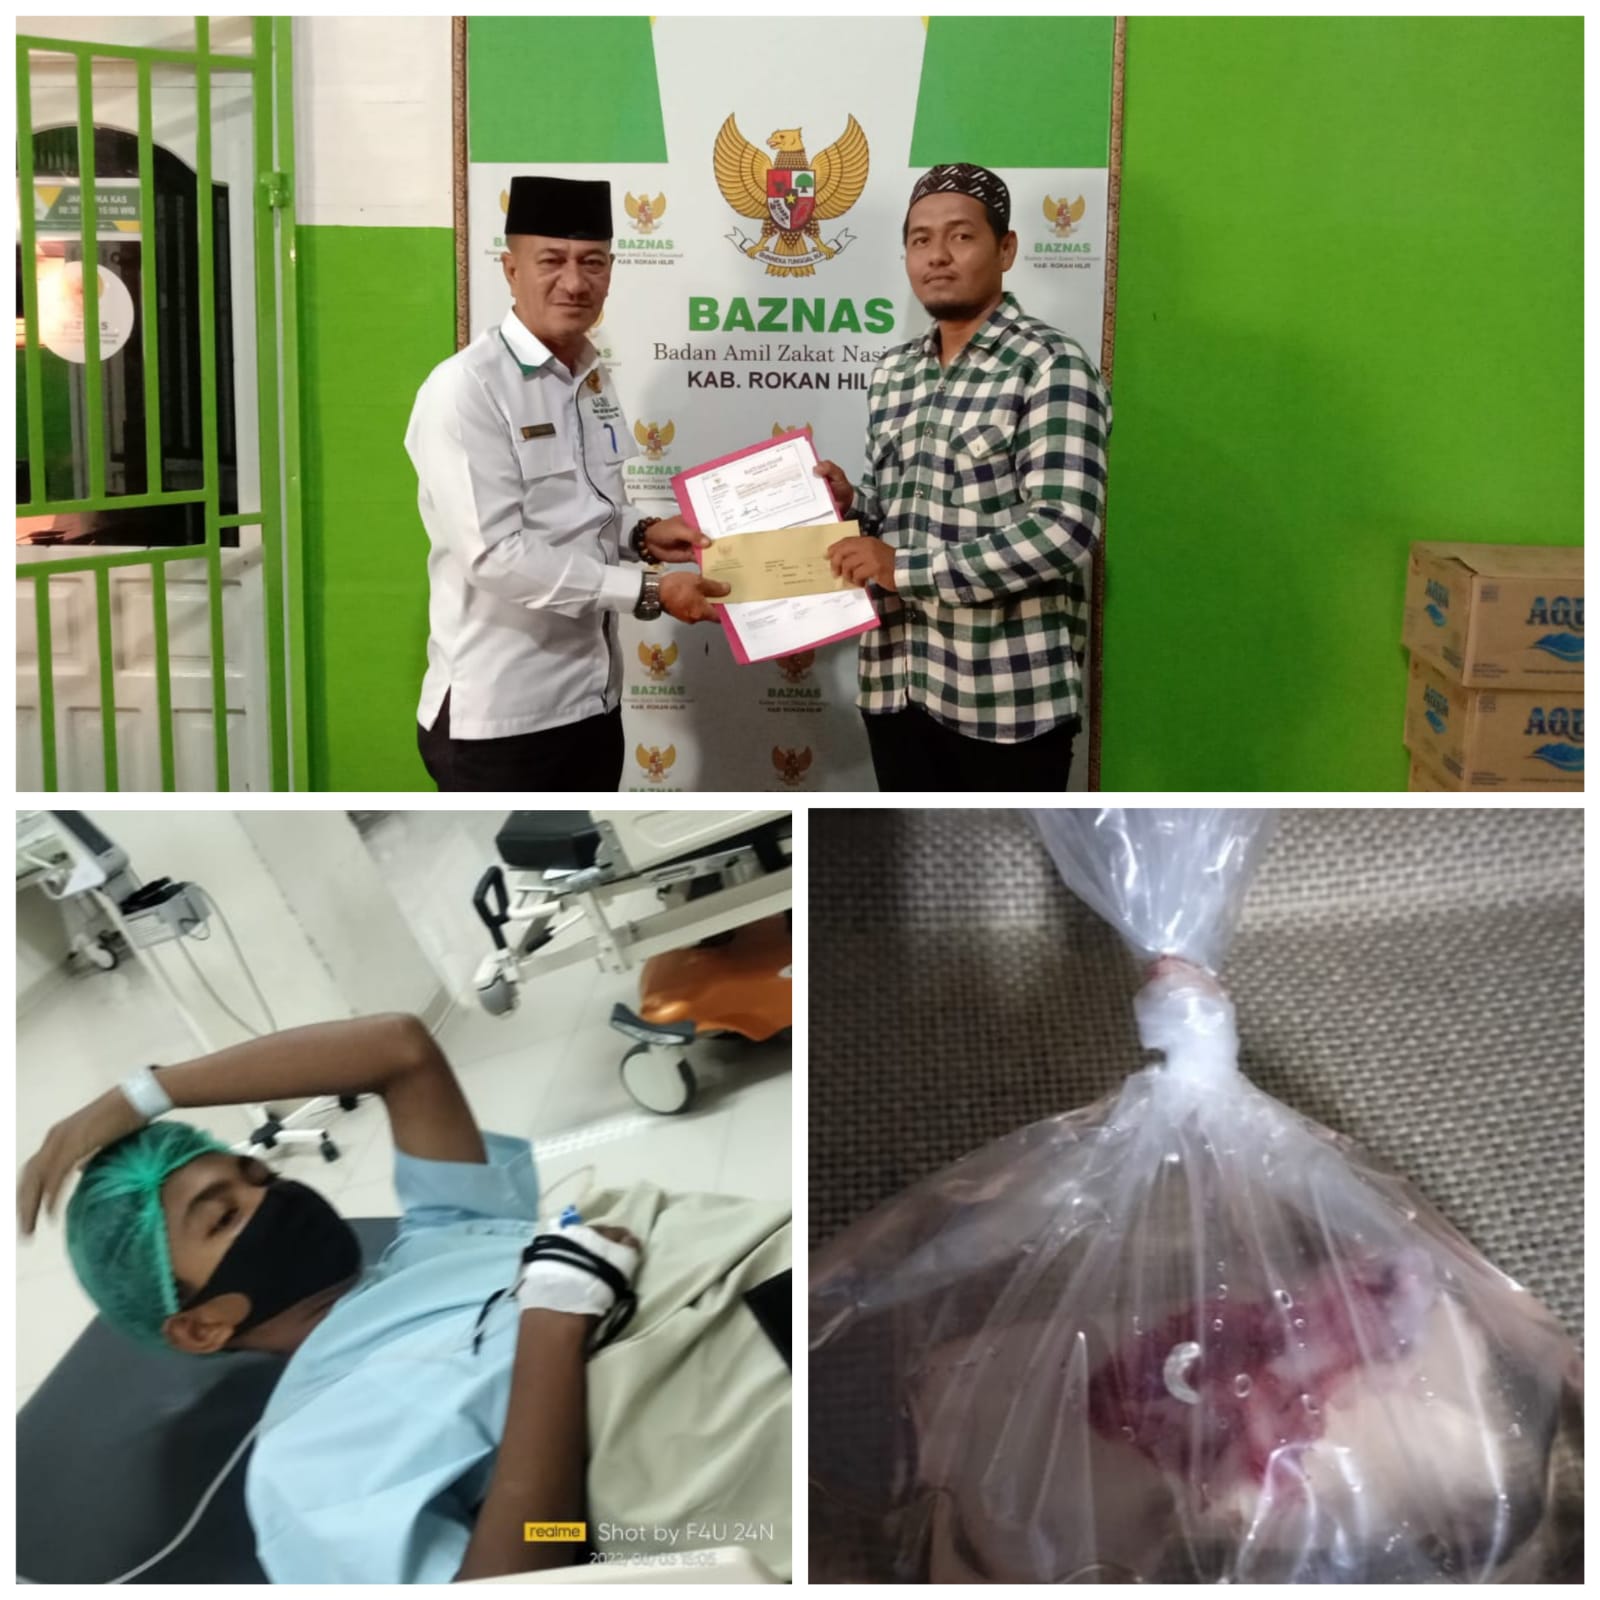 Pemerintah Kabupaten Rohil Melalui Baznas Serahkan Bantuan Kepada Keluarga Fahkrurrozi Yang Mengidap Penyakit Tumor.